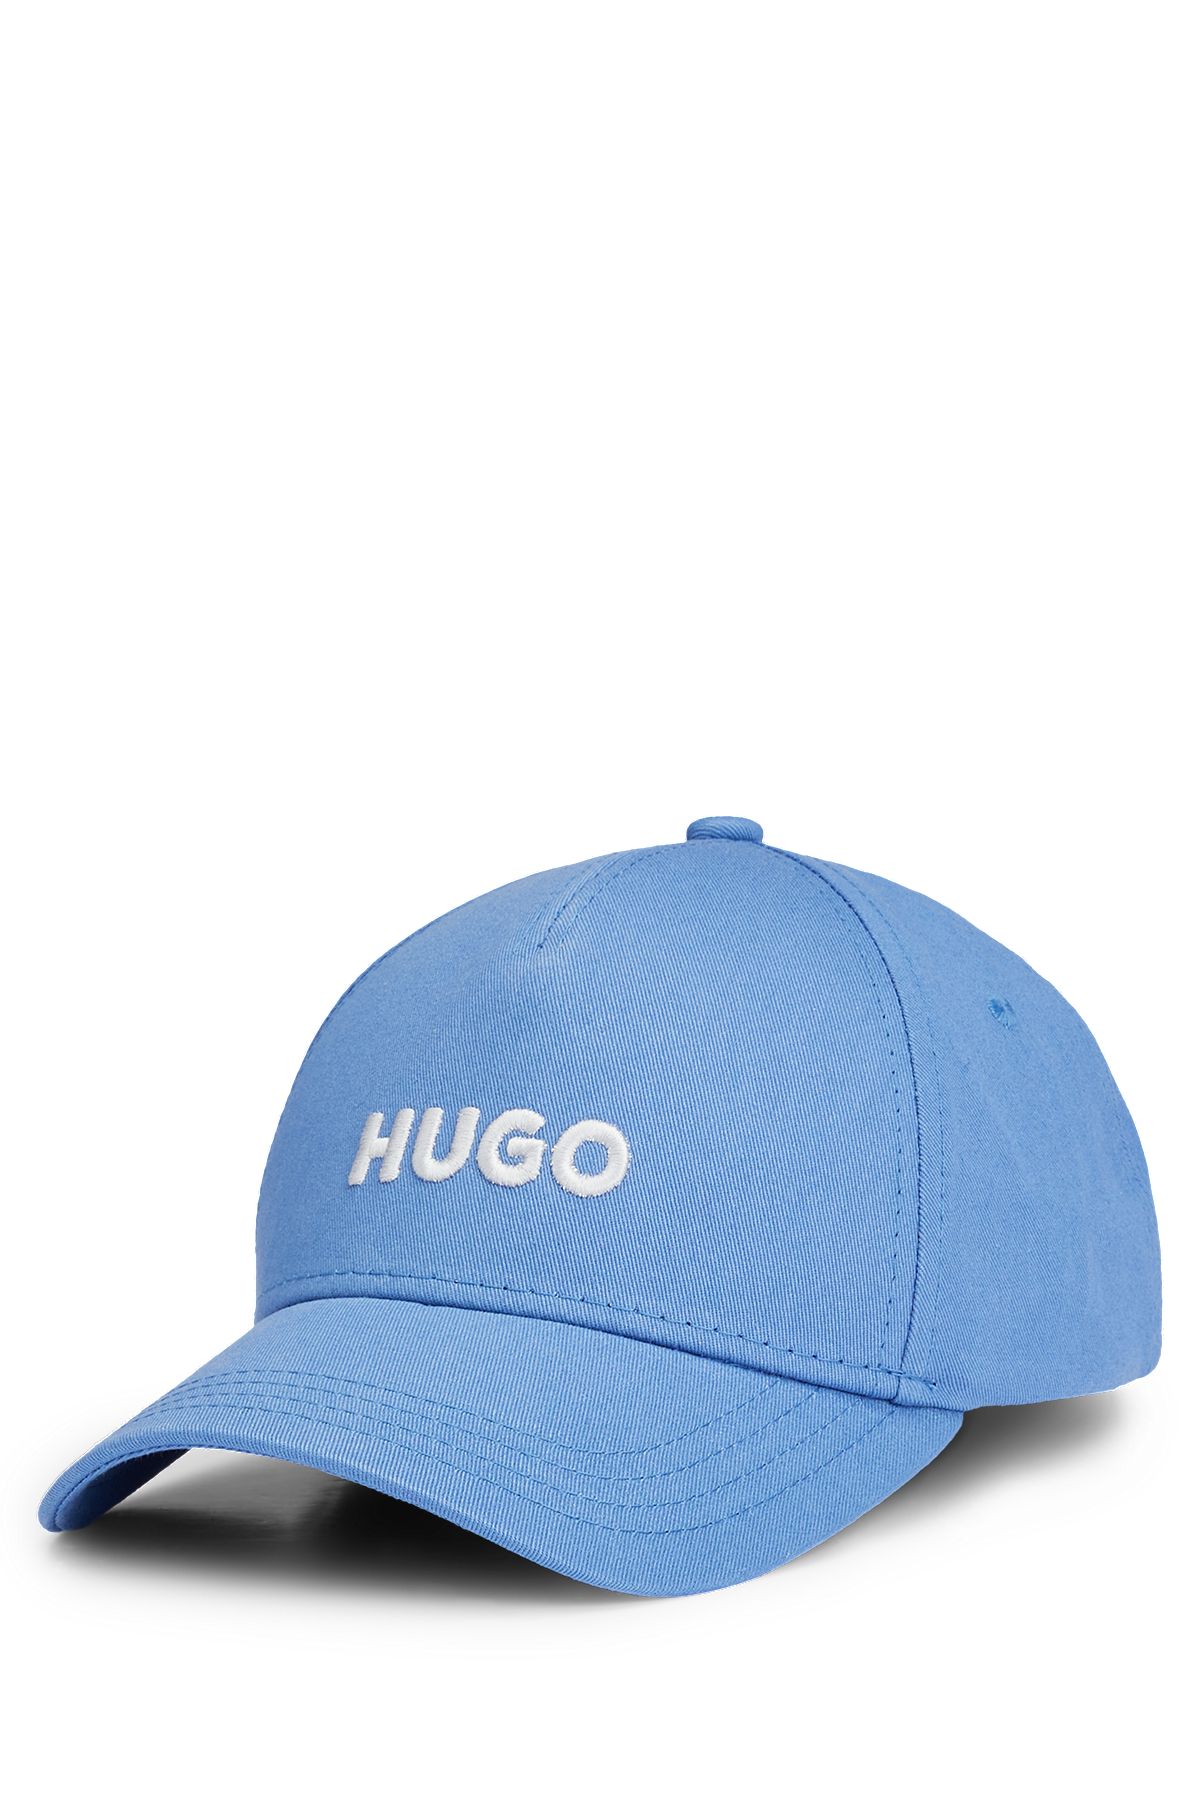 Men\'s Caps | BOSS HUGO